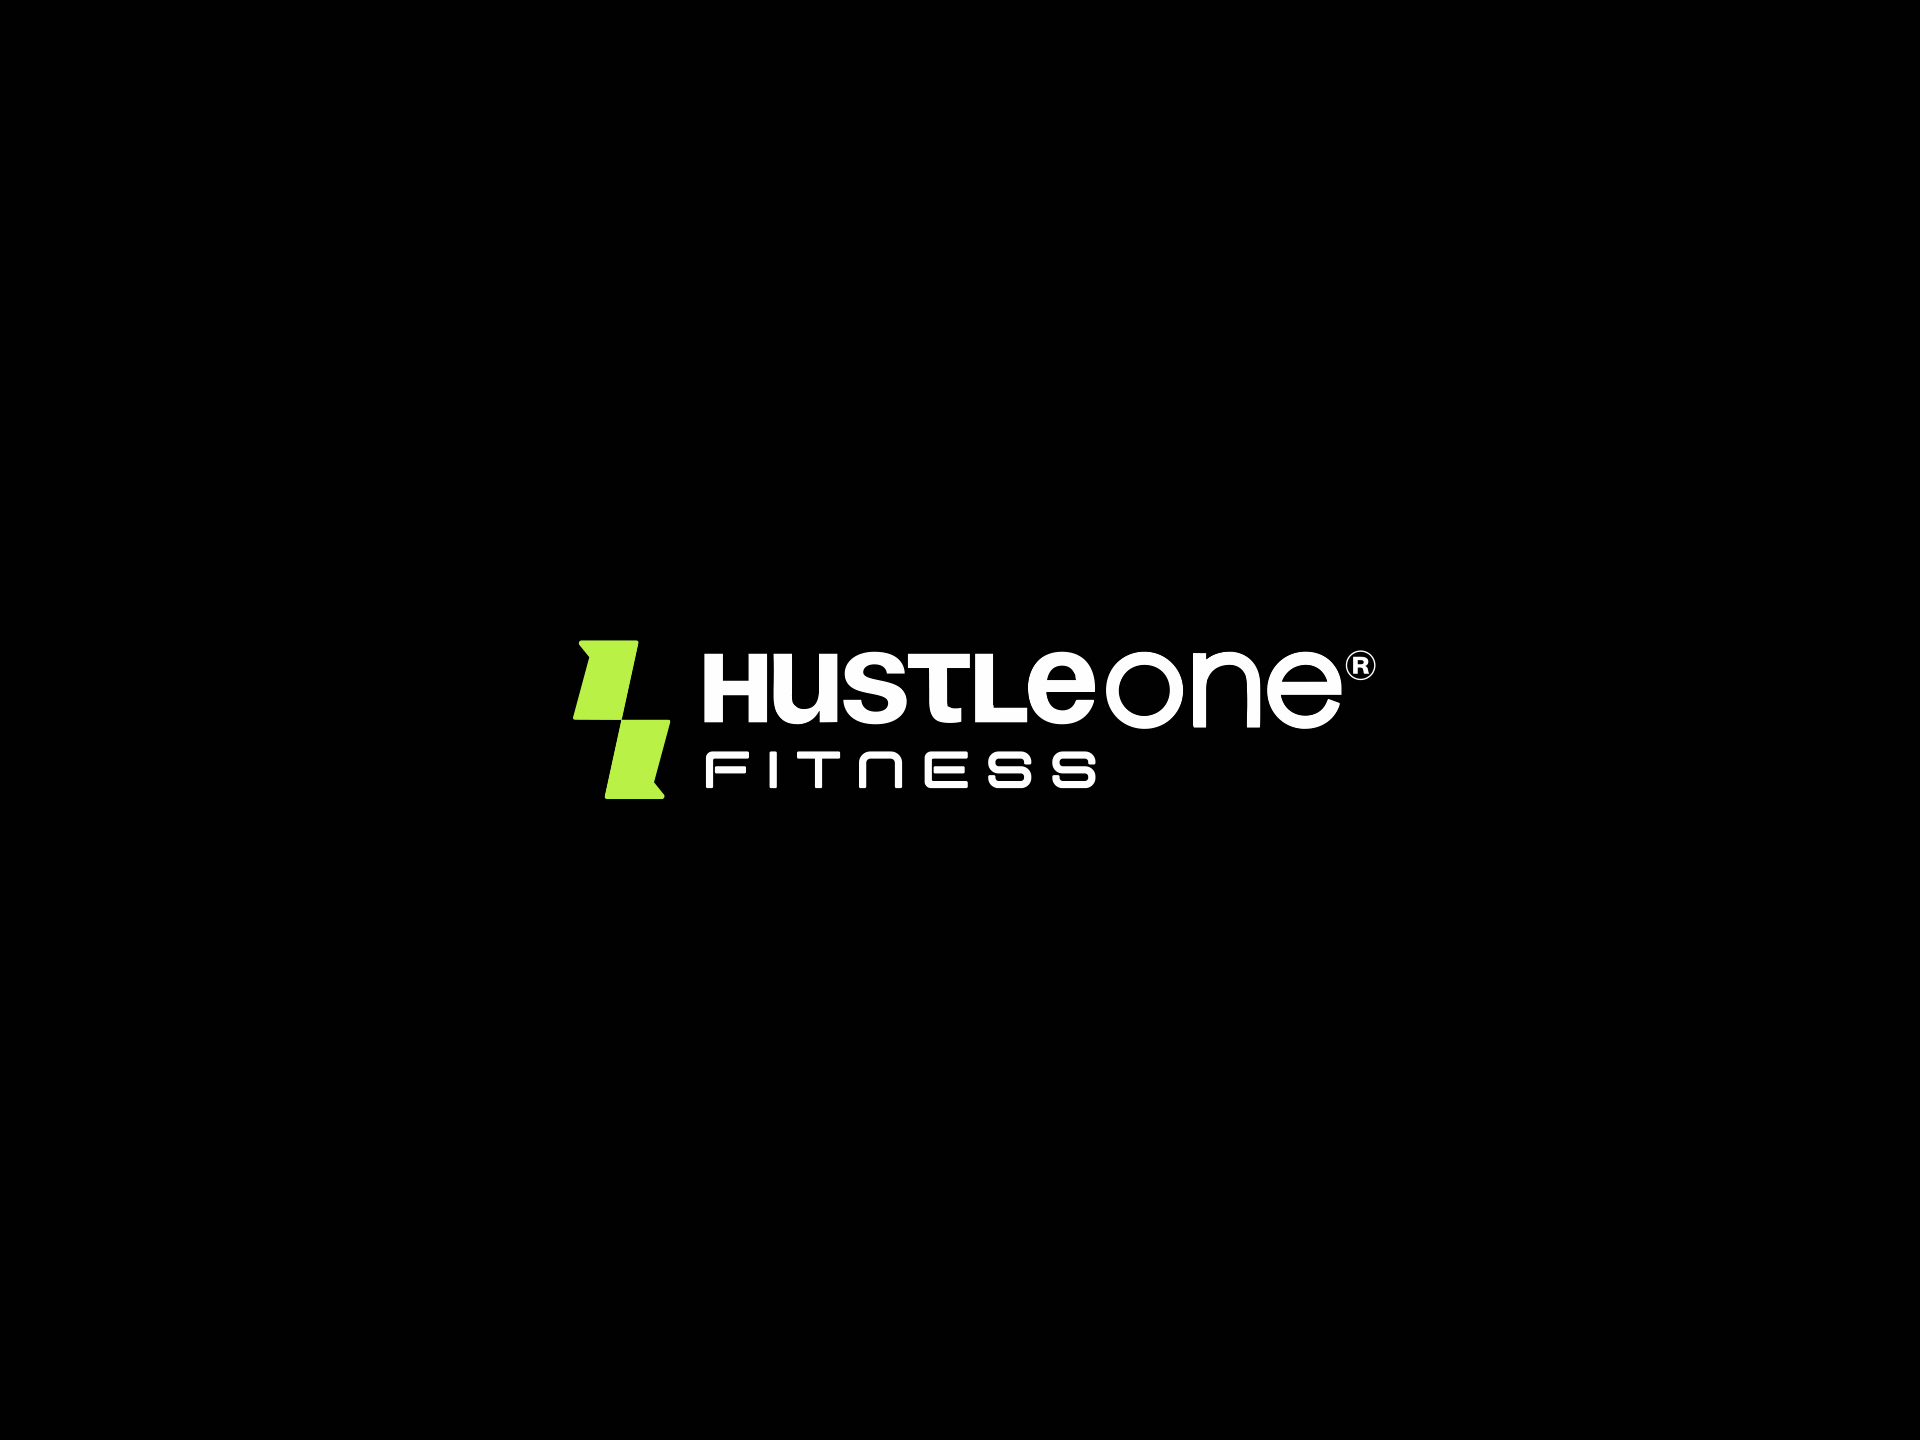 Hustleone | Fitness Logo animation by Sojib Ahmed on Dribbble